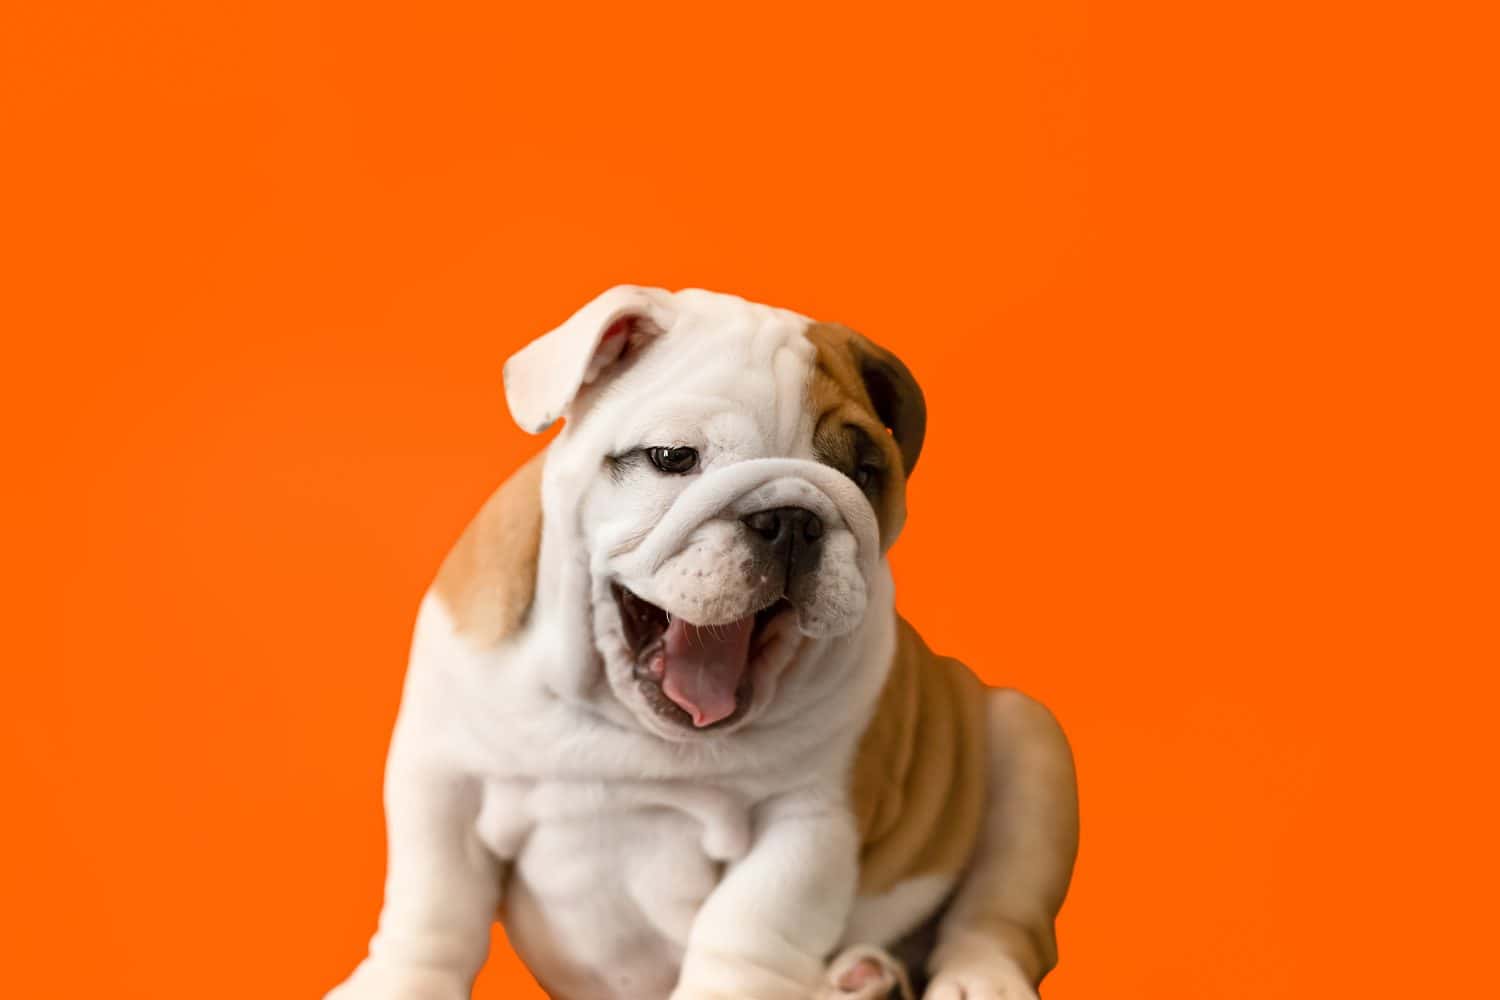 Funny English bulldog puppy on an orange background. Pets. A thoroughbred dog.